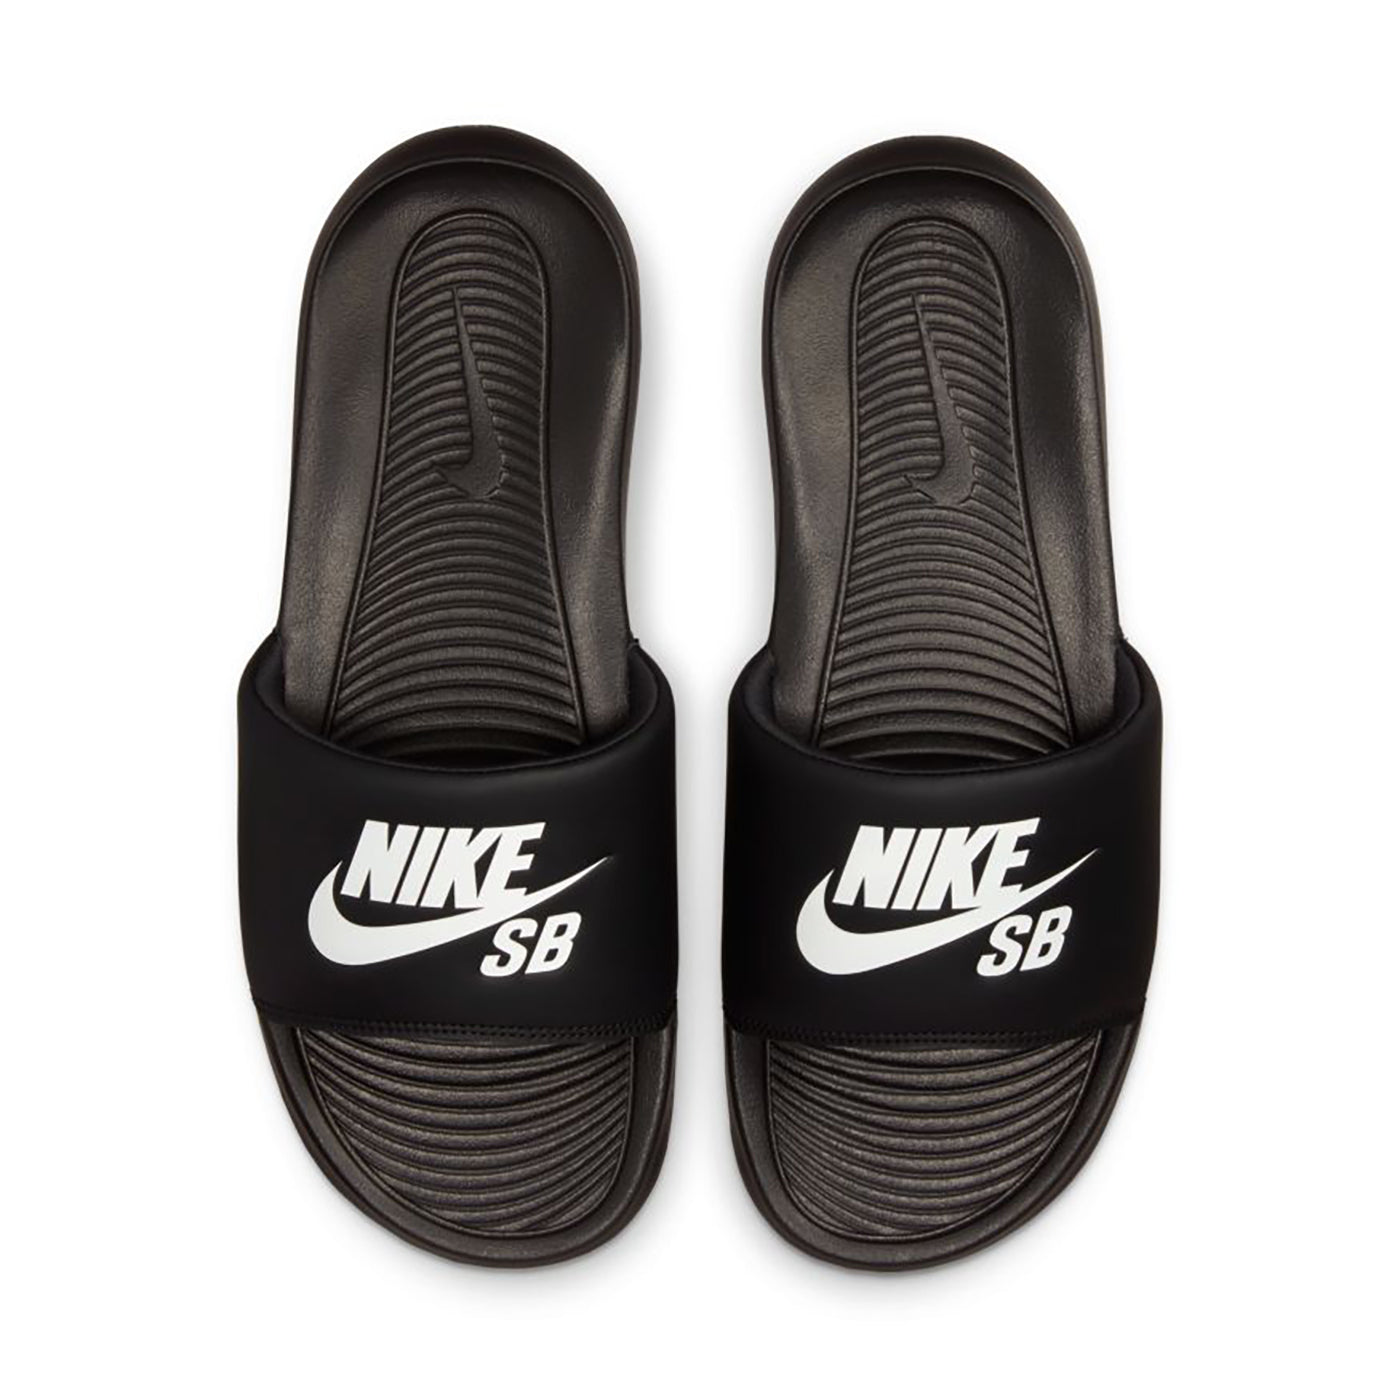 One Sliders in / White- Black by Nike SB Bored of Southsea